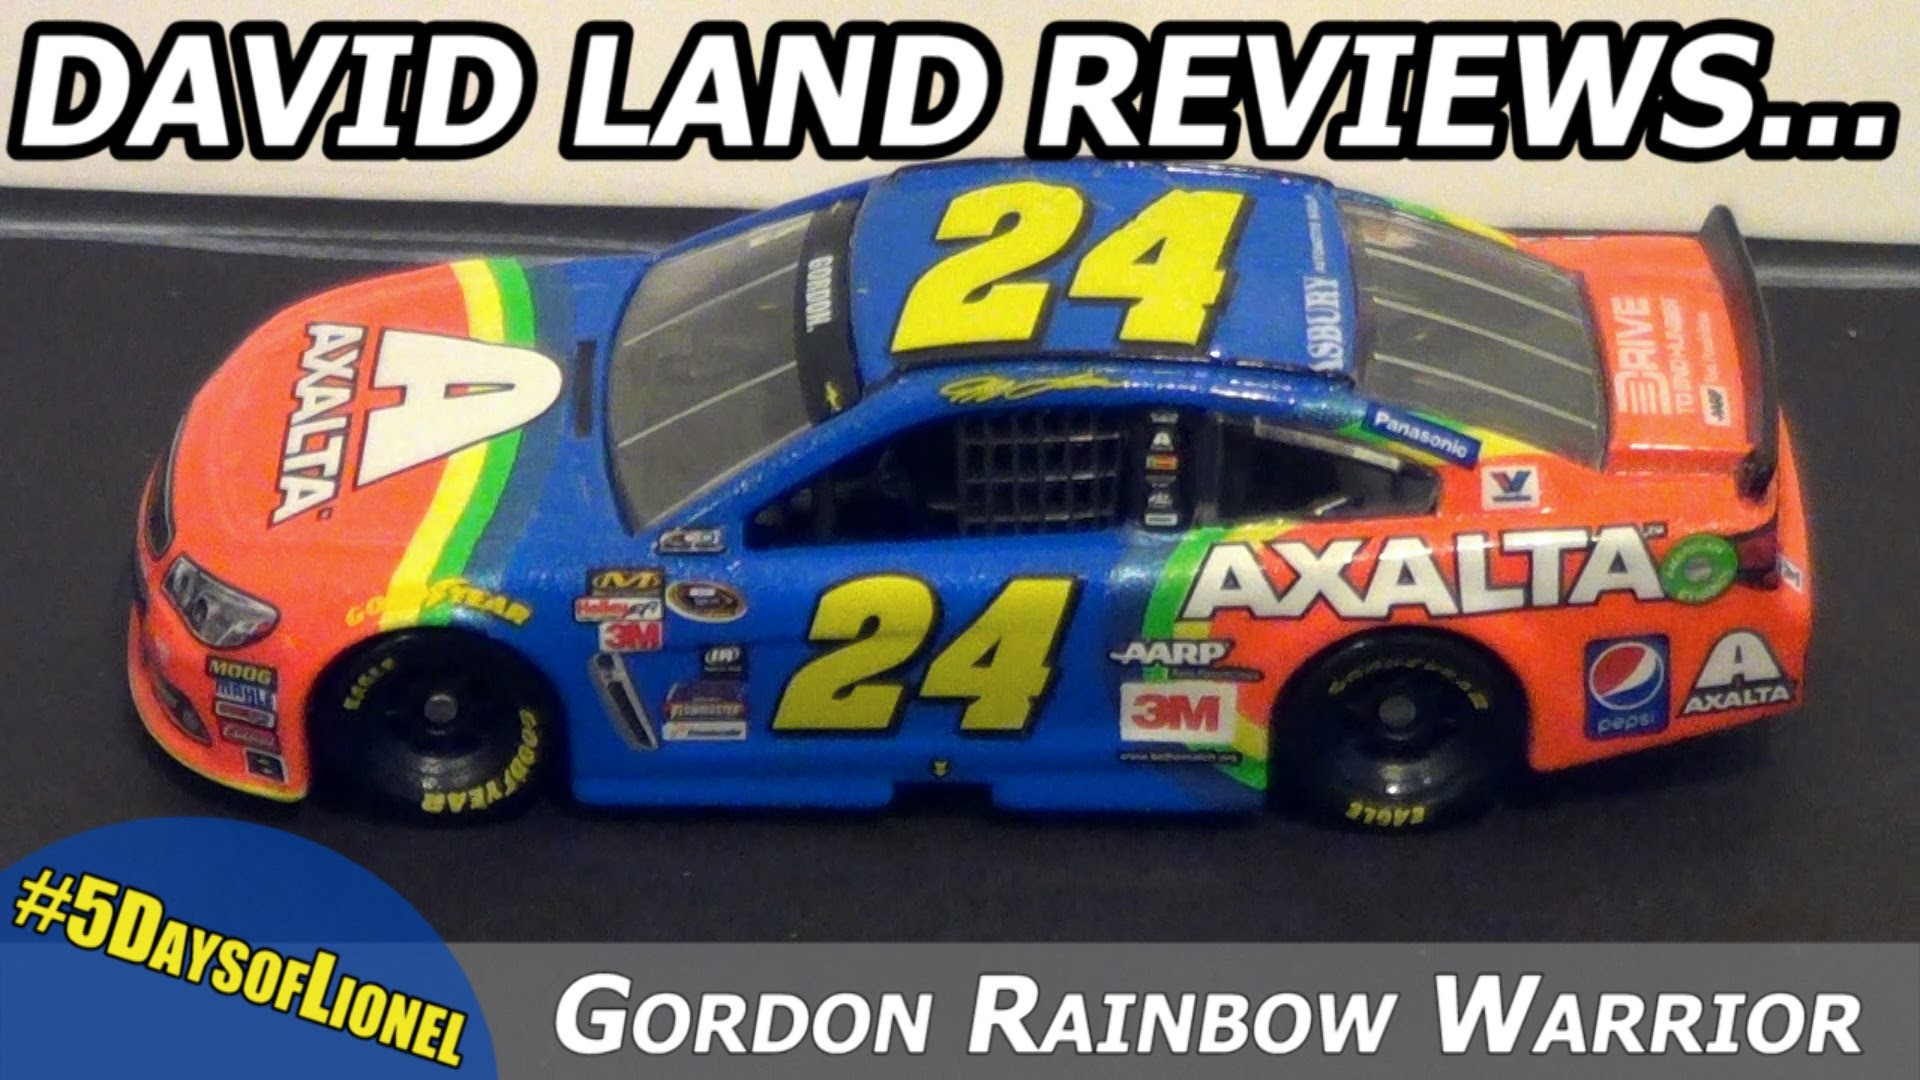 1920x1080 Lionel NASCAR 1:64 Scale Diecast Review: Jeff Gordon Rainbow Warrior  #5DaysofLionel - YouTube